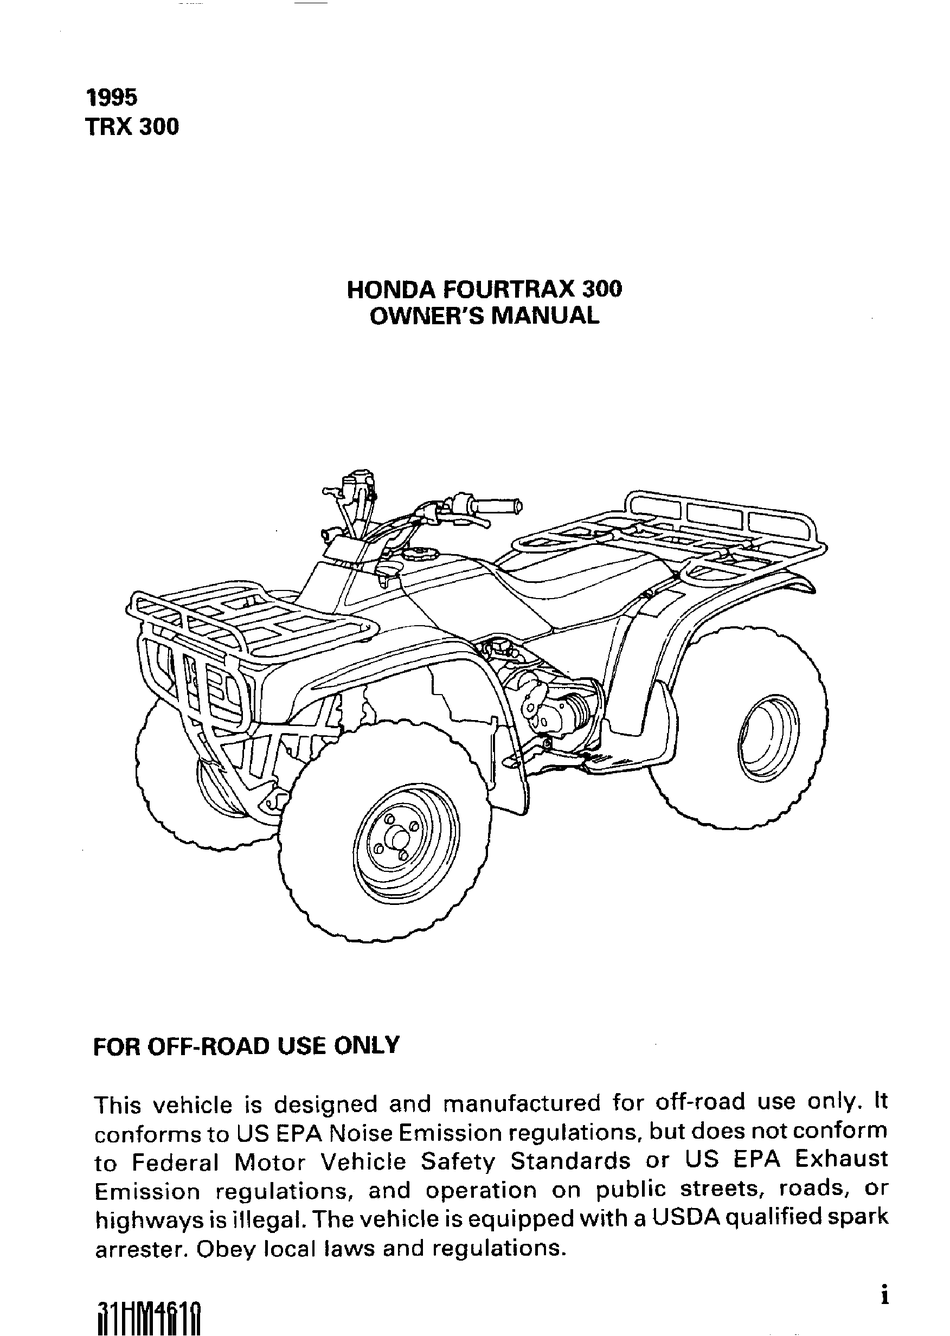 1998 Honda Fourtrax 300 Wiring Diagram - 4K Wallpapers Review